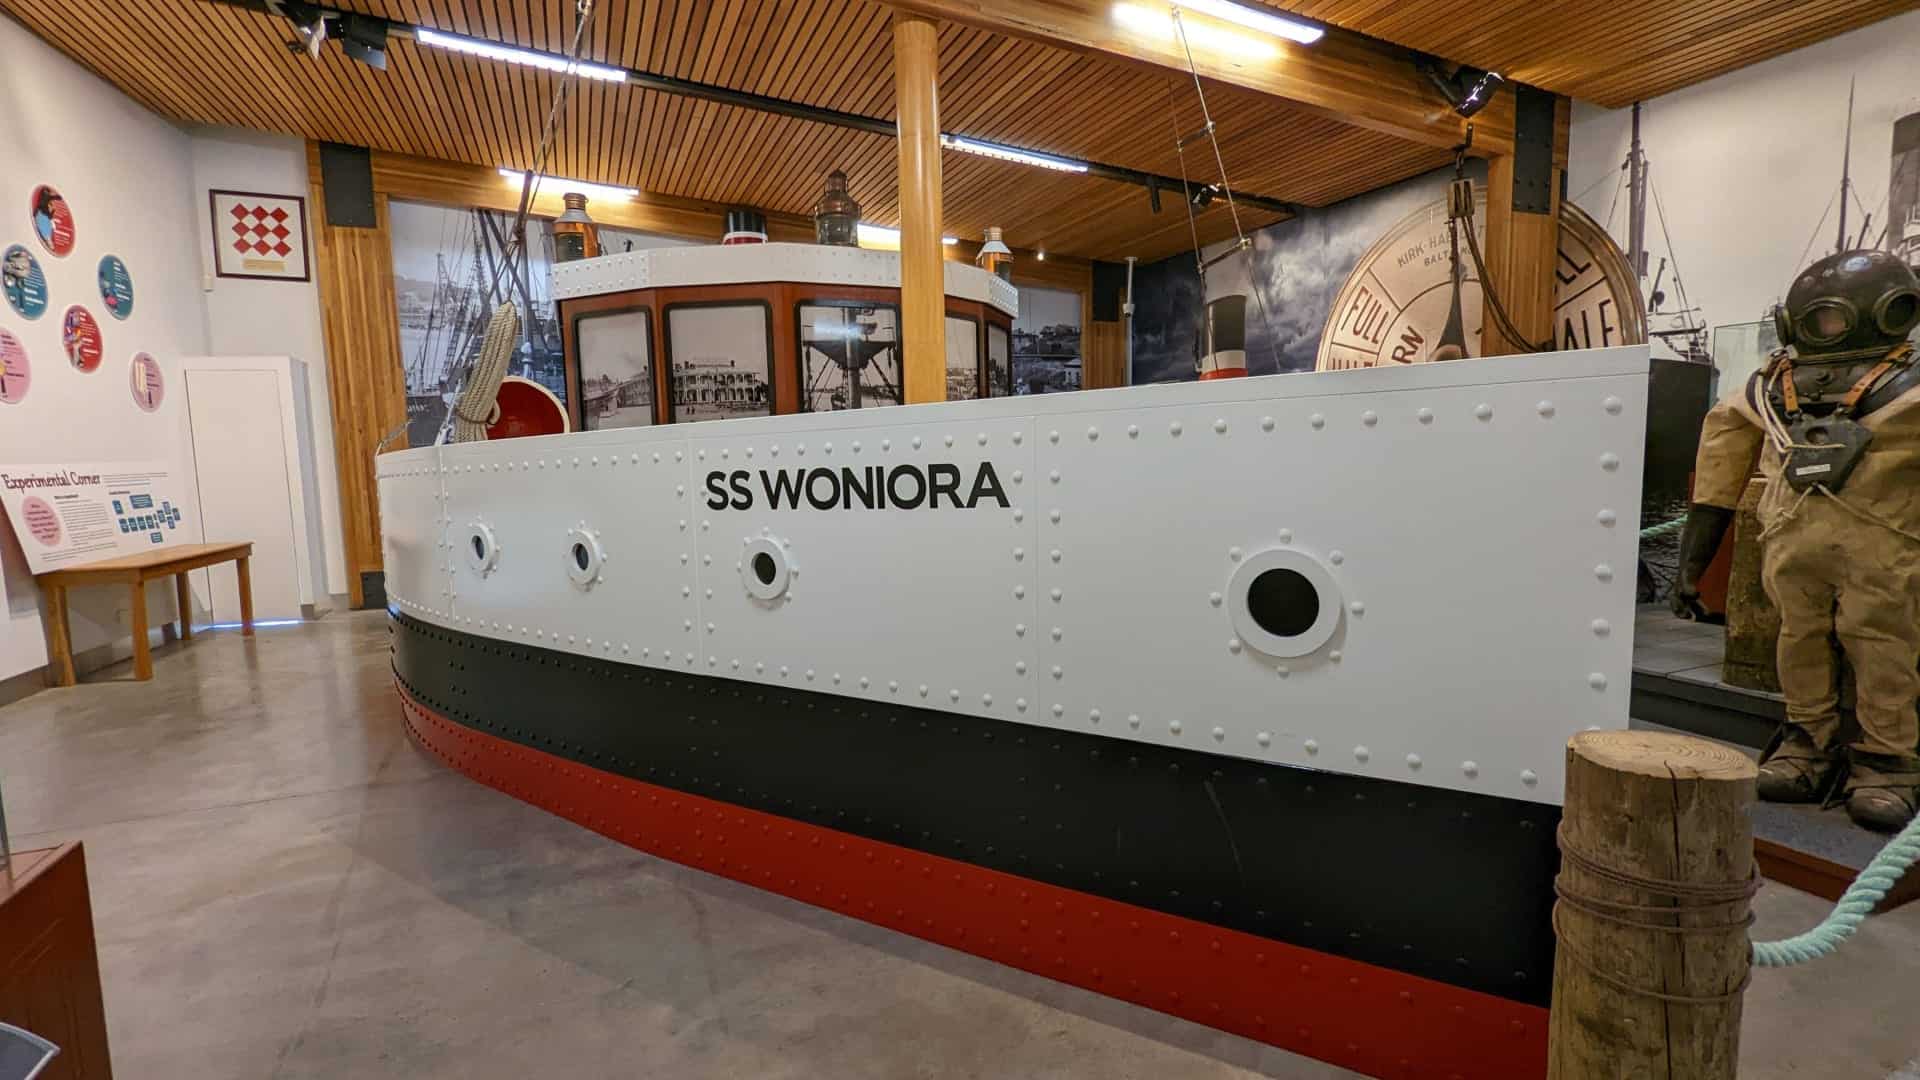 Vintage ship SS Woniora exhibit in museum.